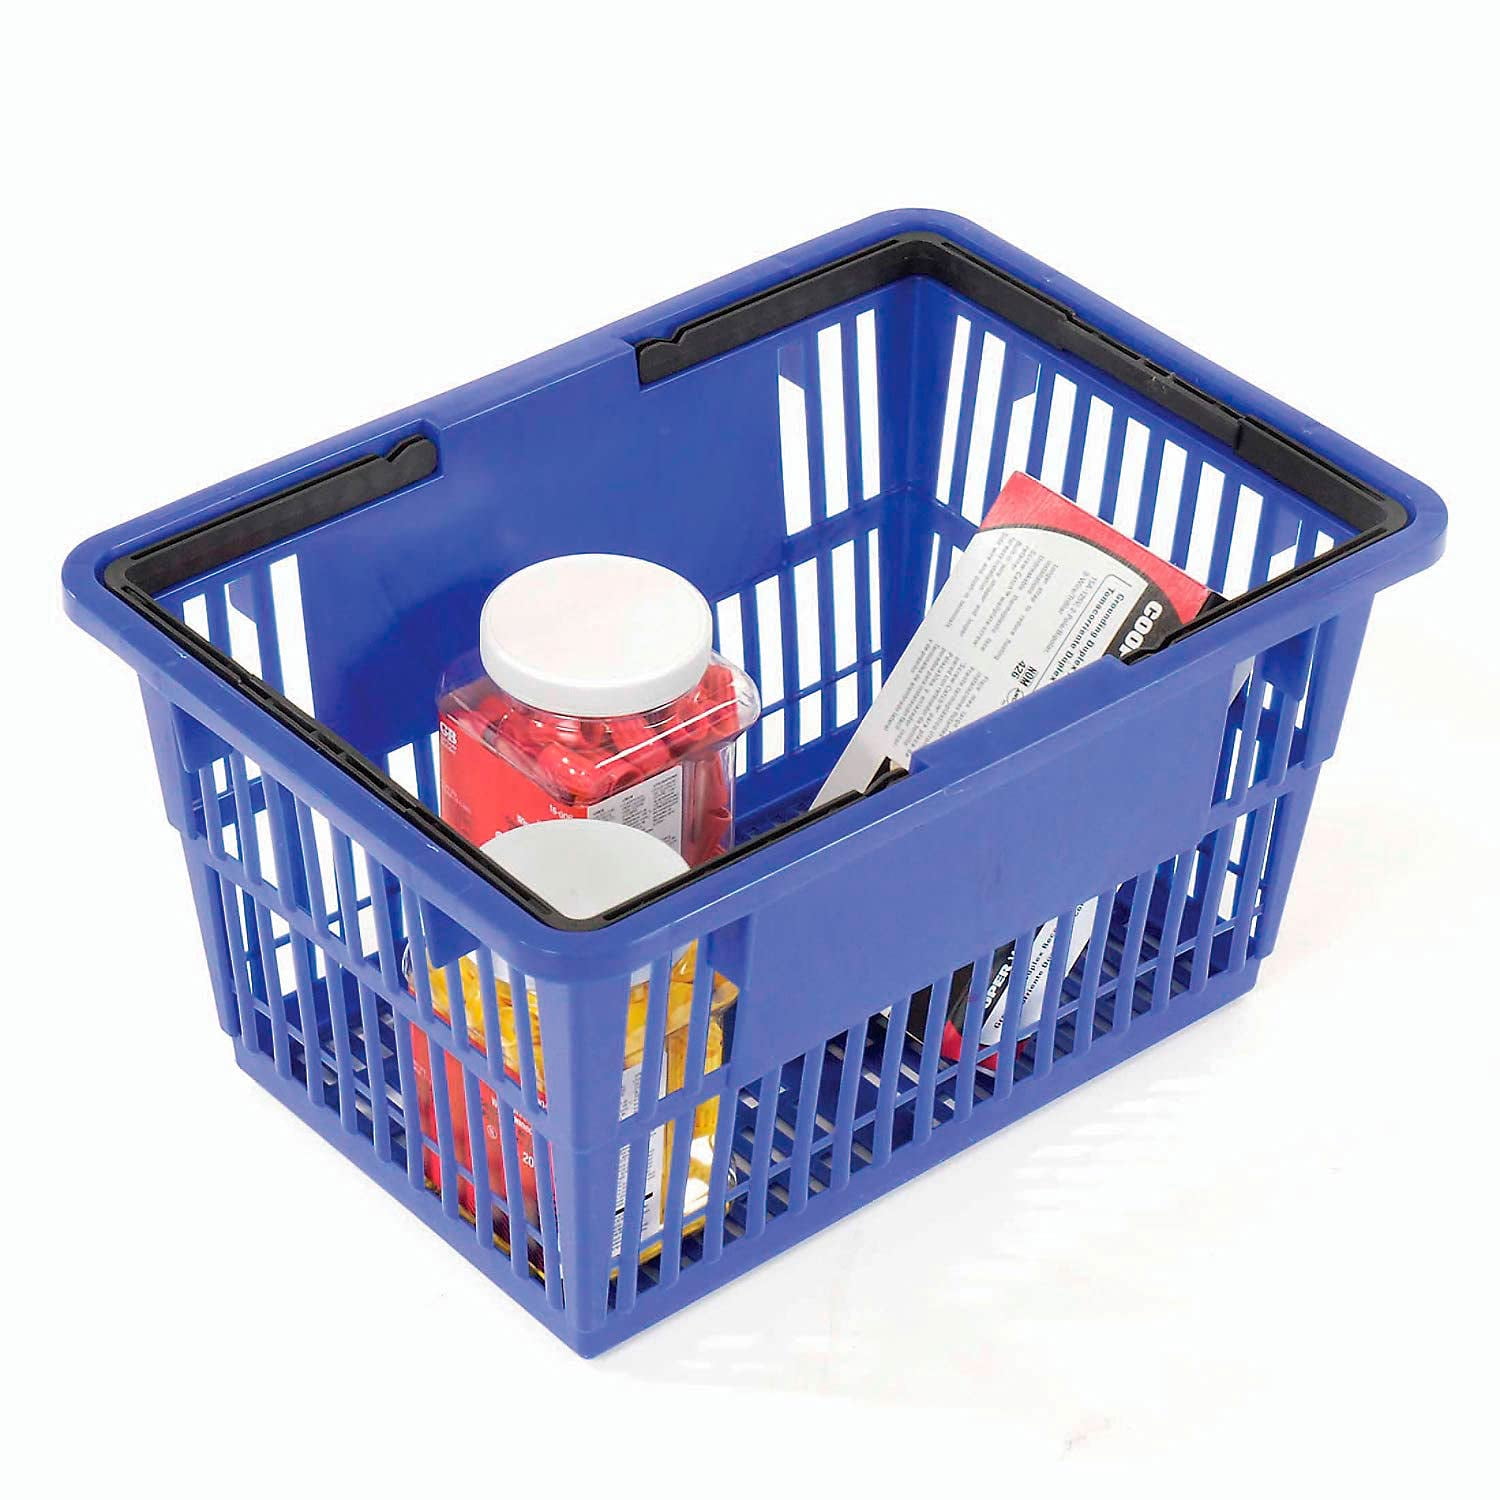 Wholesale 10 Plastic Basket with Holes BLUE WHITE